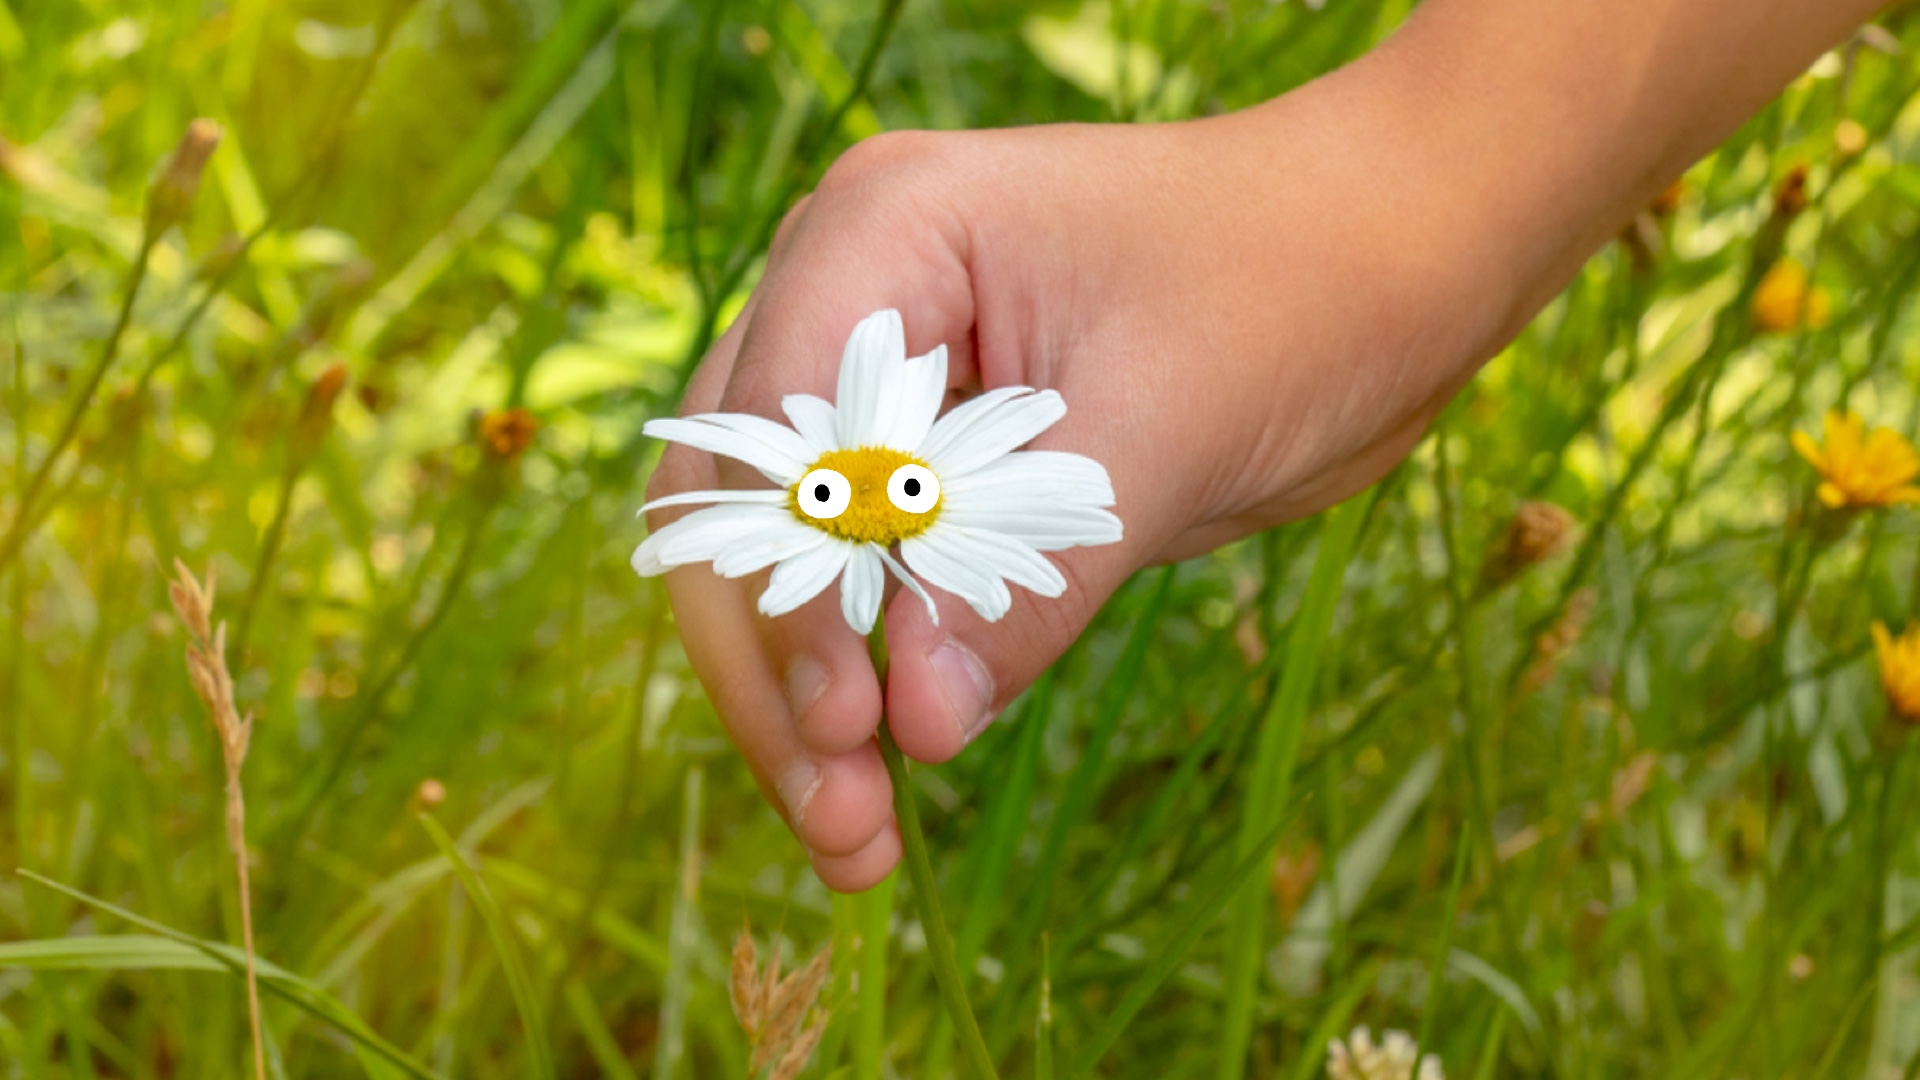 A happy daisy flower